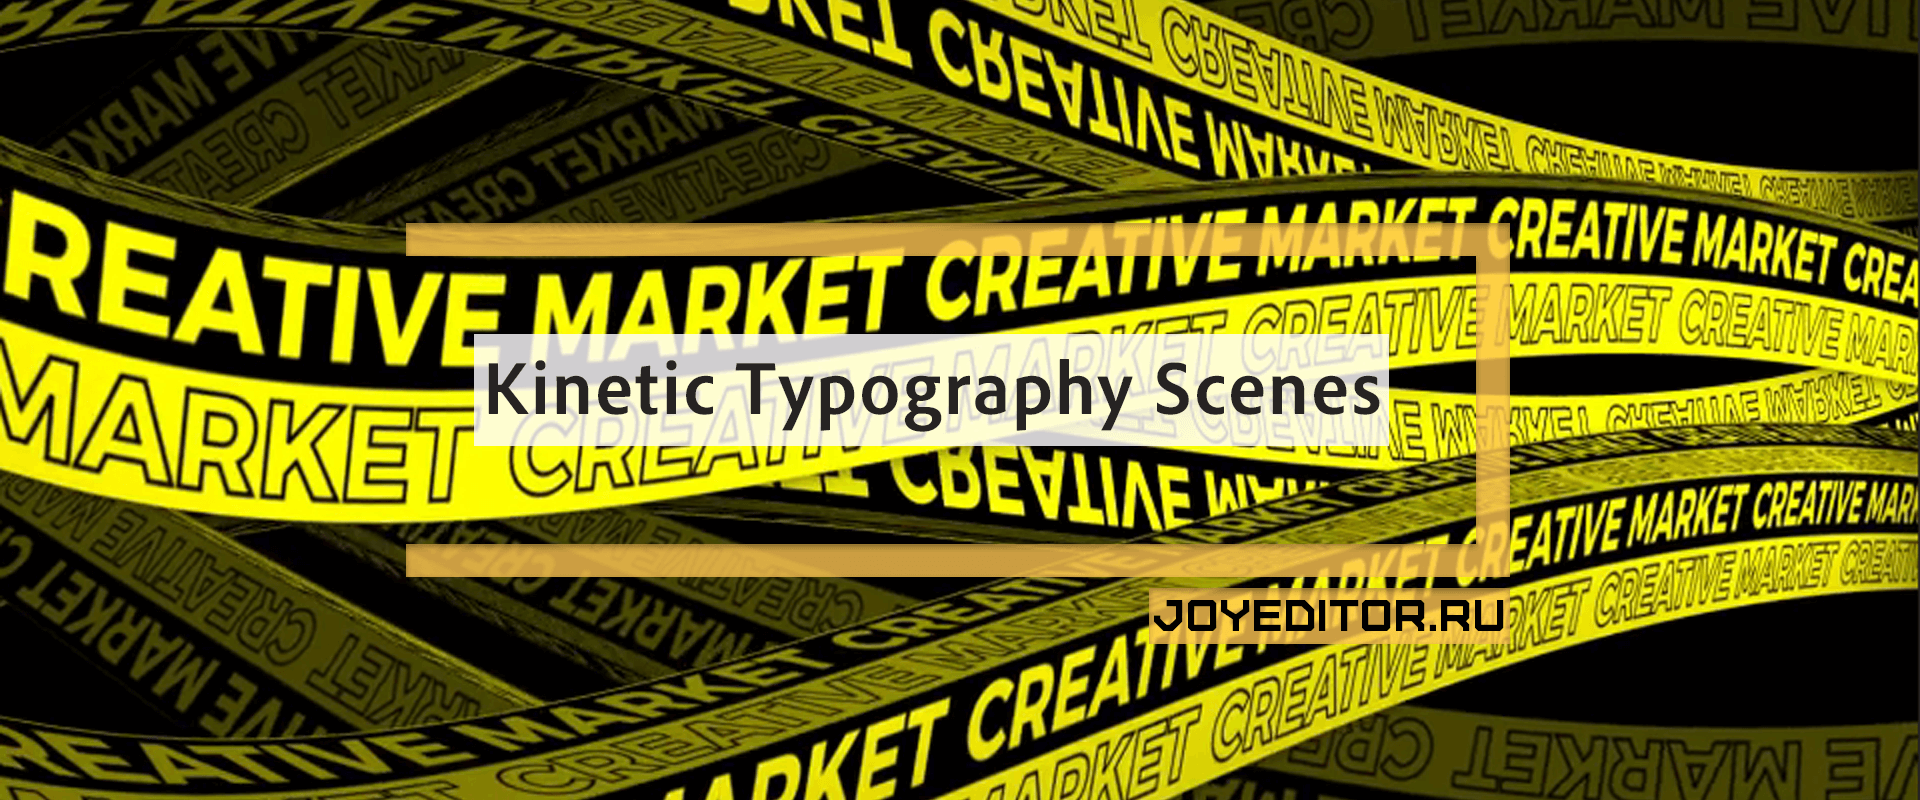 Kinetic Typography Scenes